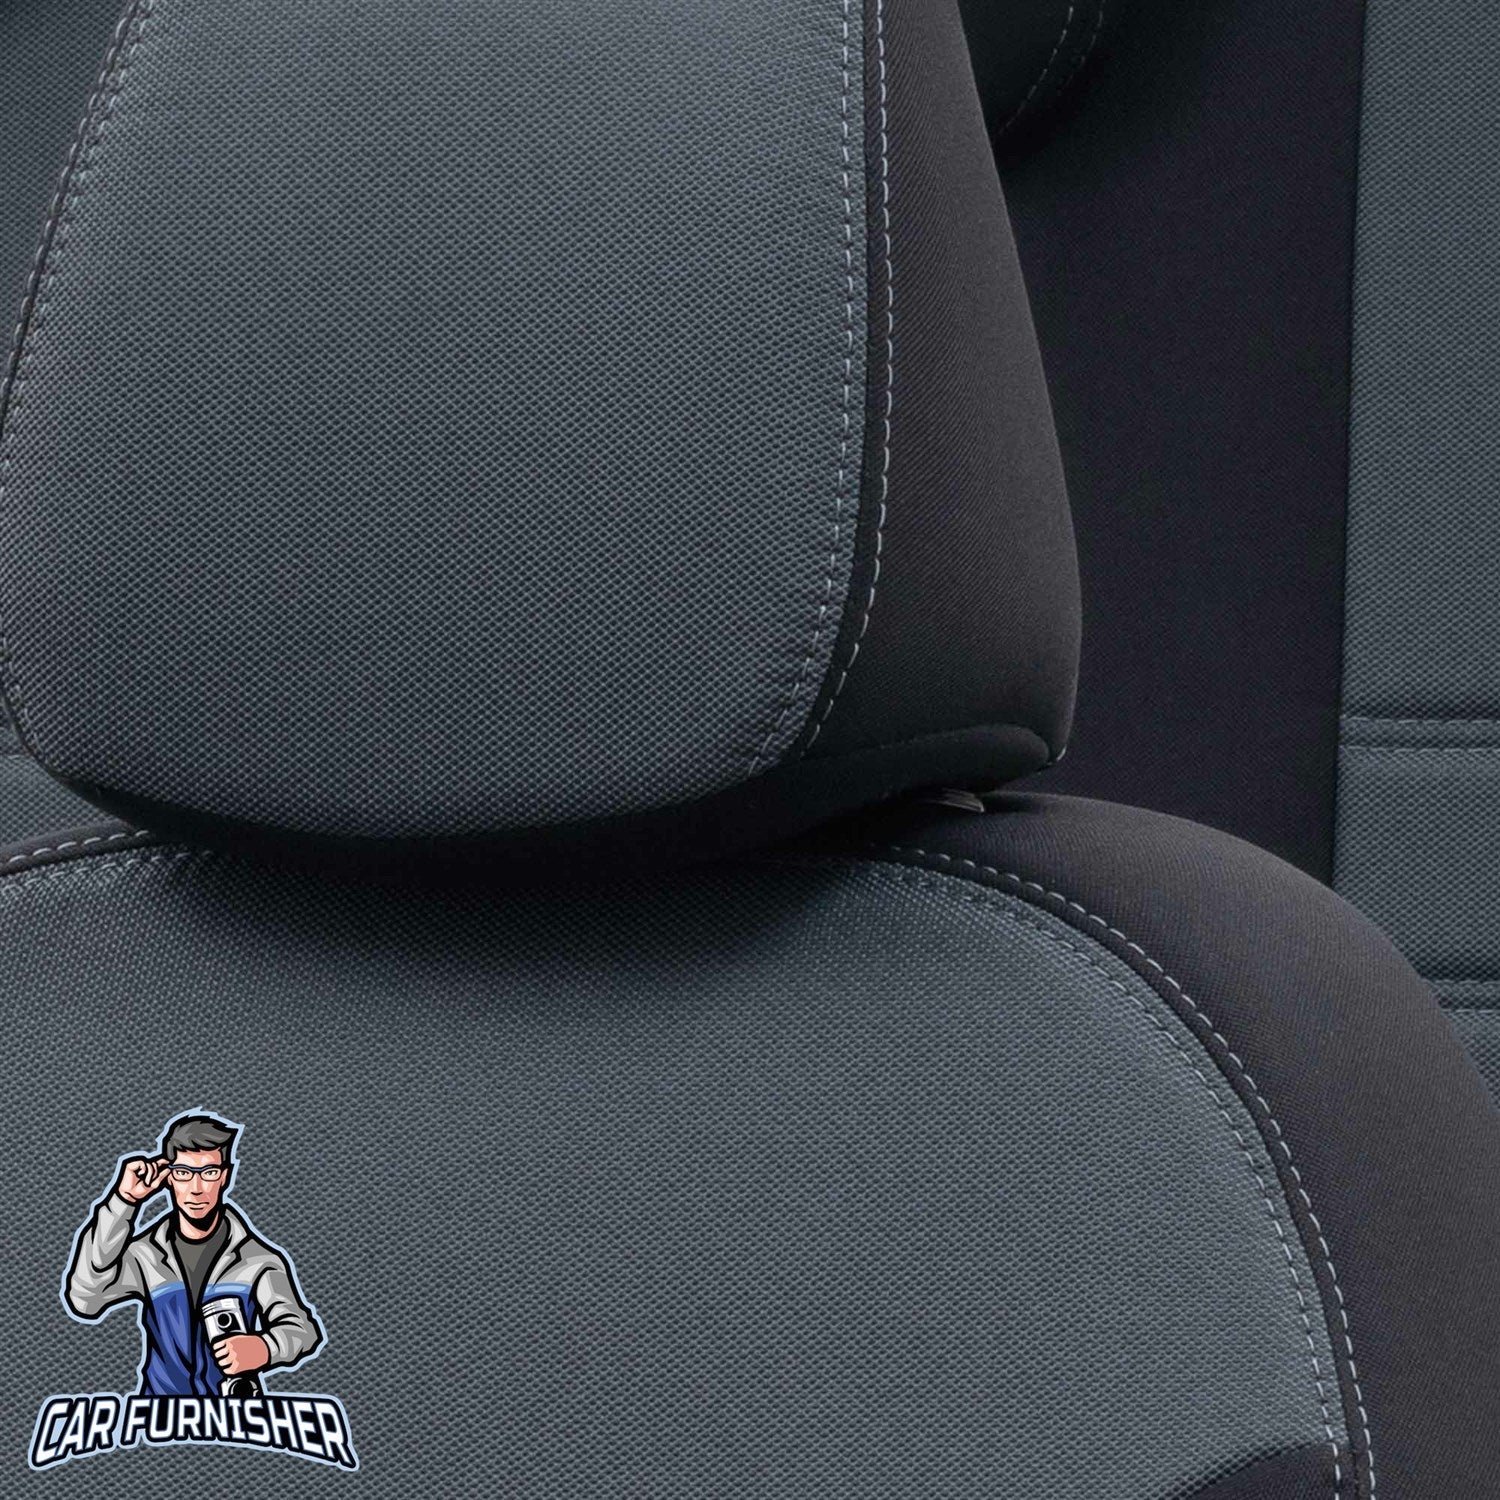 Volkswagen Bora Seat Cover Original Jacquard Design Smoked Black Jacquard Fabric